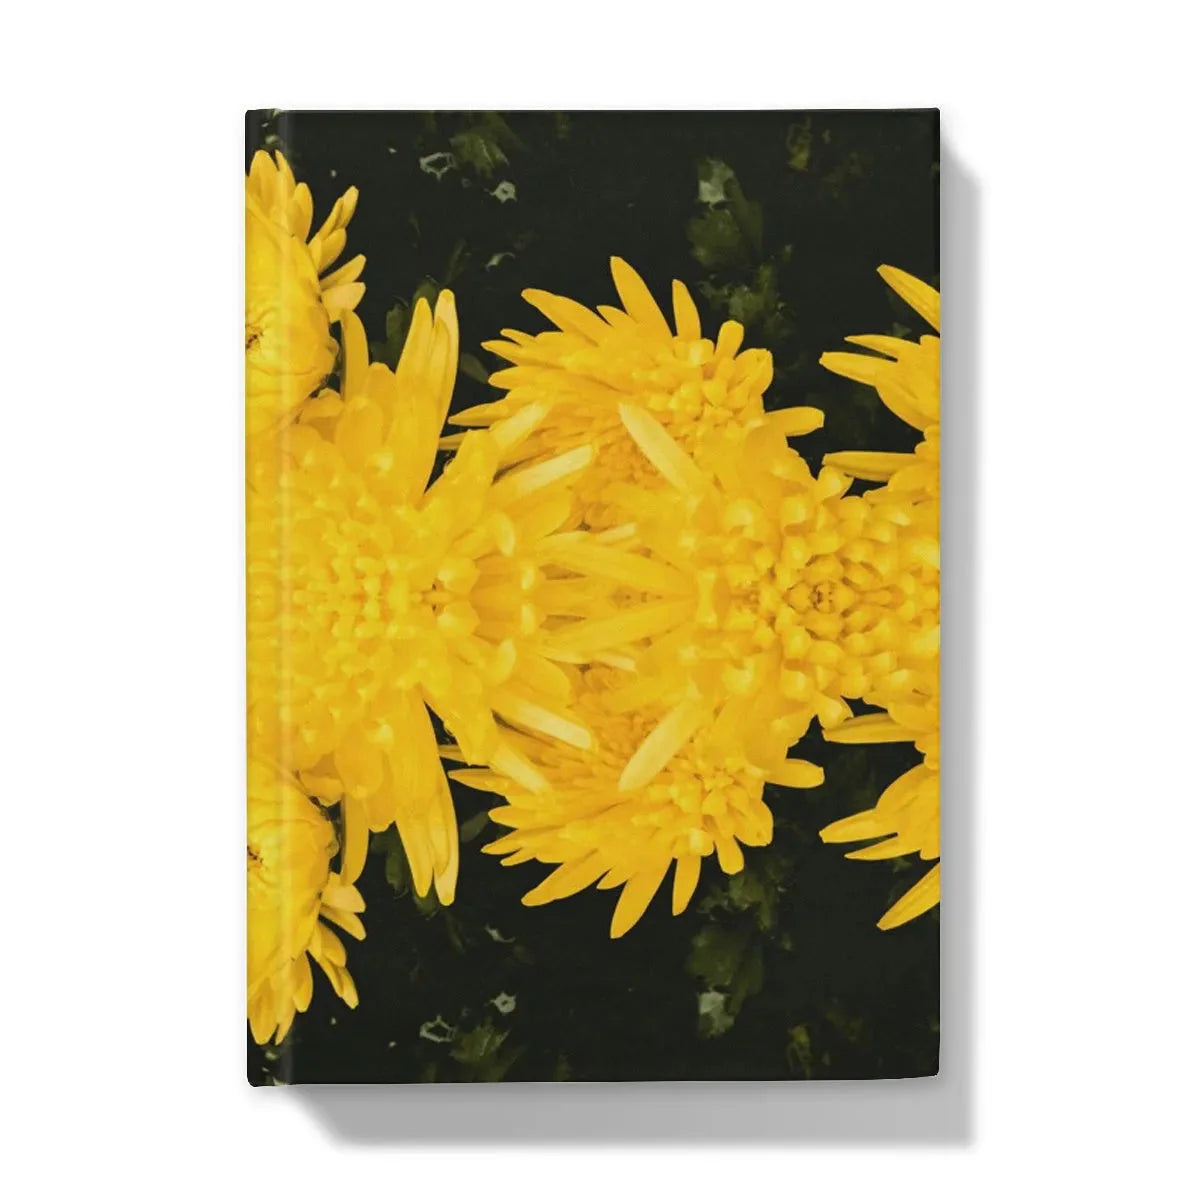 Tweedledum Hardback Journal - 5’x7’ / 5’ x 7’ - Lined Paper - Notebooks & Notepads - Aesthetic Art